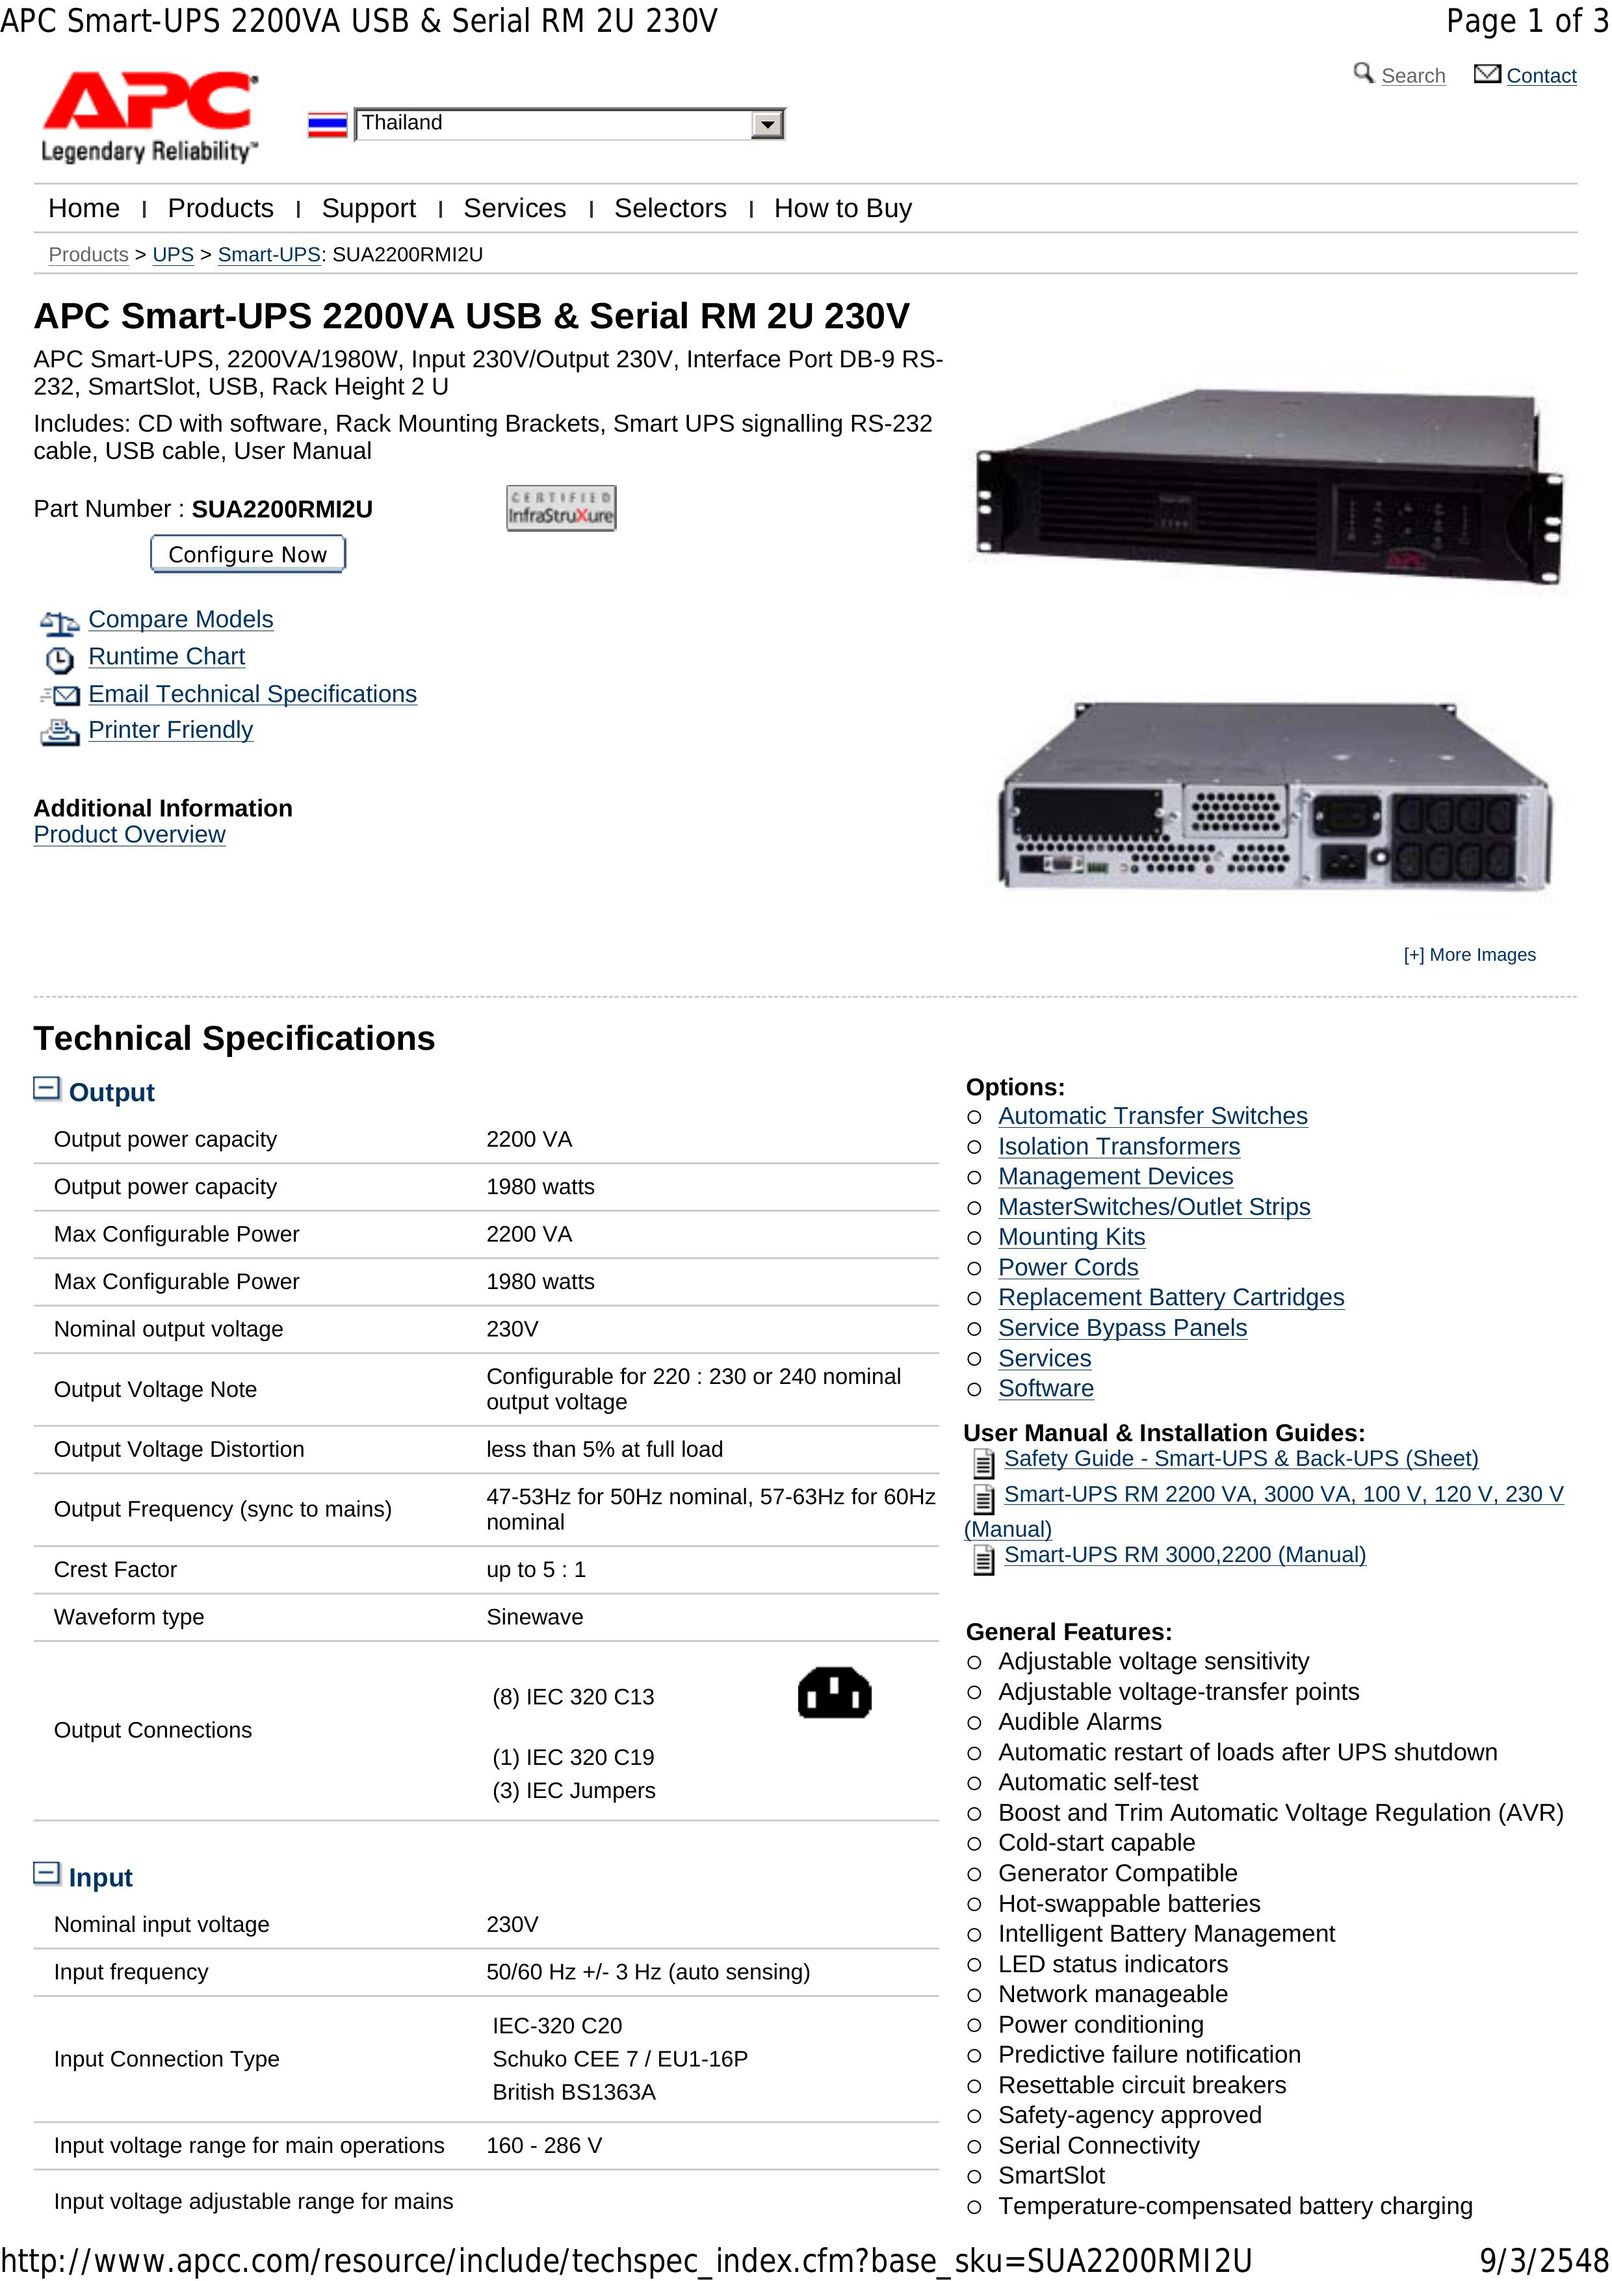 APC UPS 2200VA Network Card User Manual